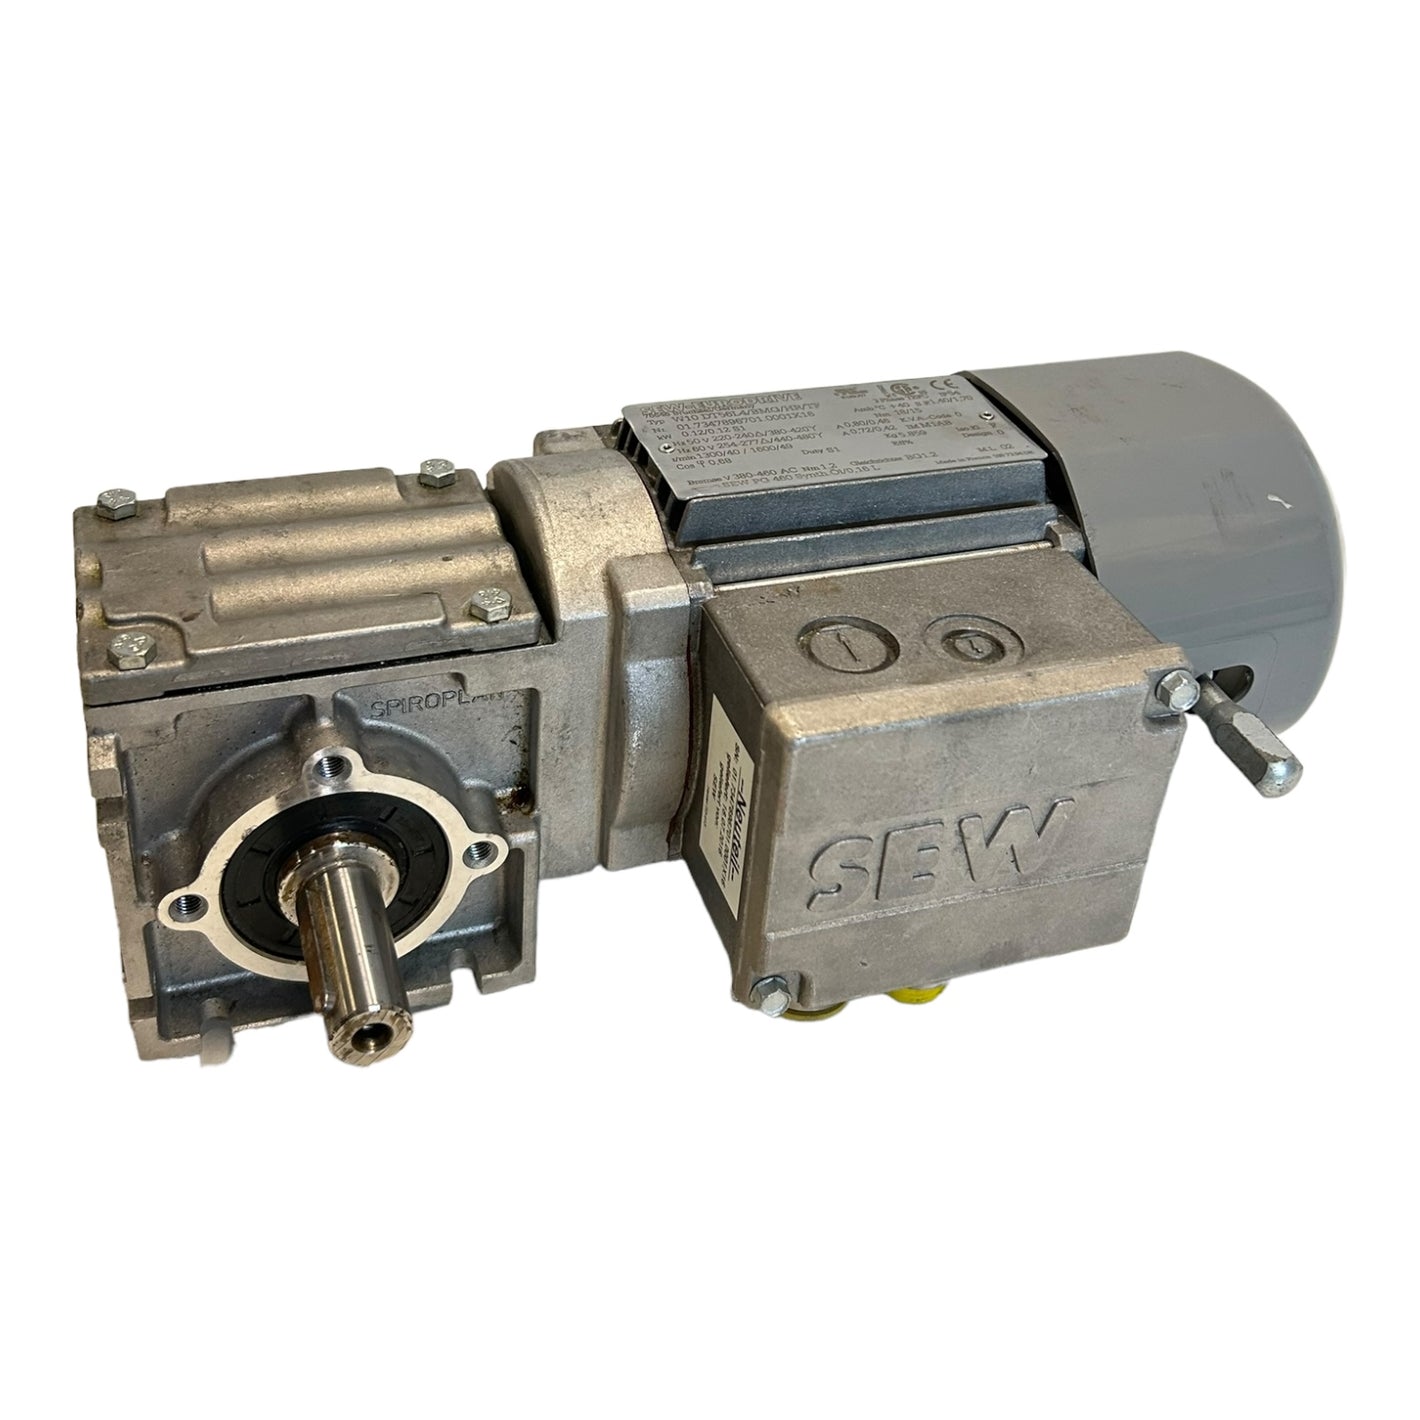 SEW W10DT56L4/BMG/HR/TF gear motor 0.12kW gear motor for industrial use